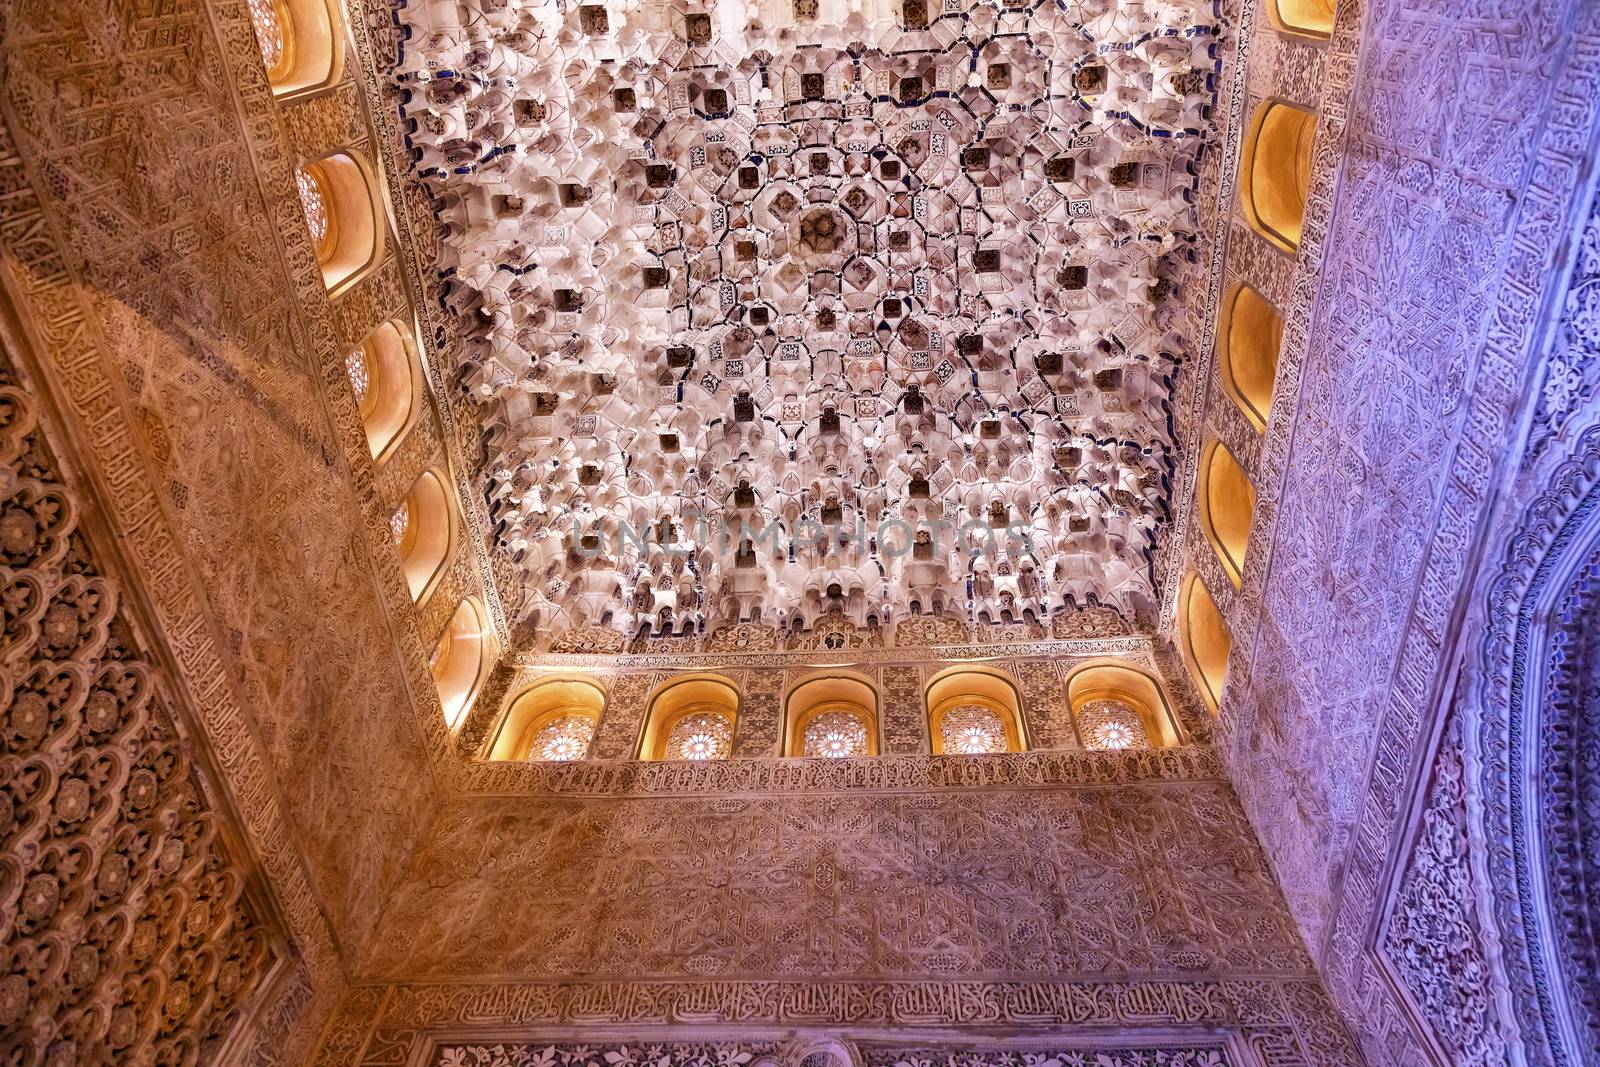 Square Shaped Domed Ceiling Sala de los Reyes Alhambra Moorish Wall Windows Patterns Designs Granada Andalusia Spain  